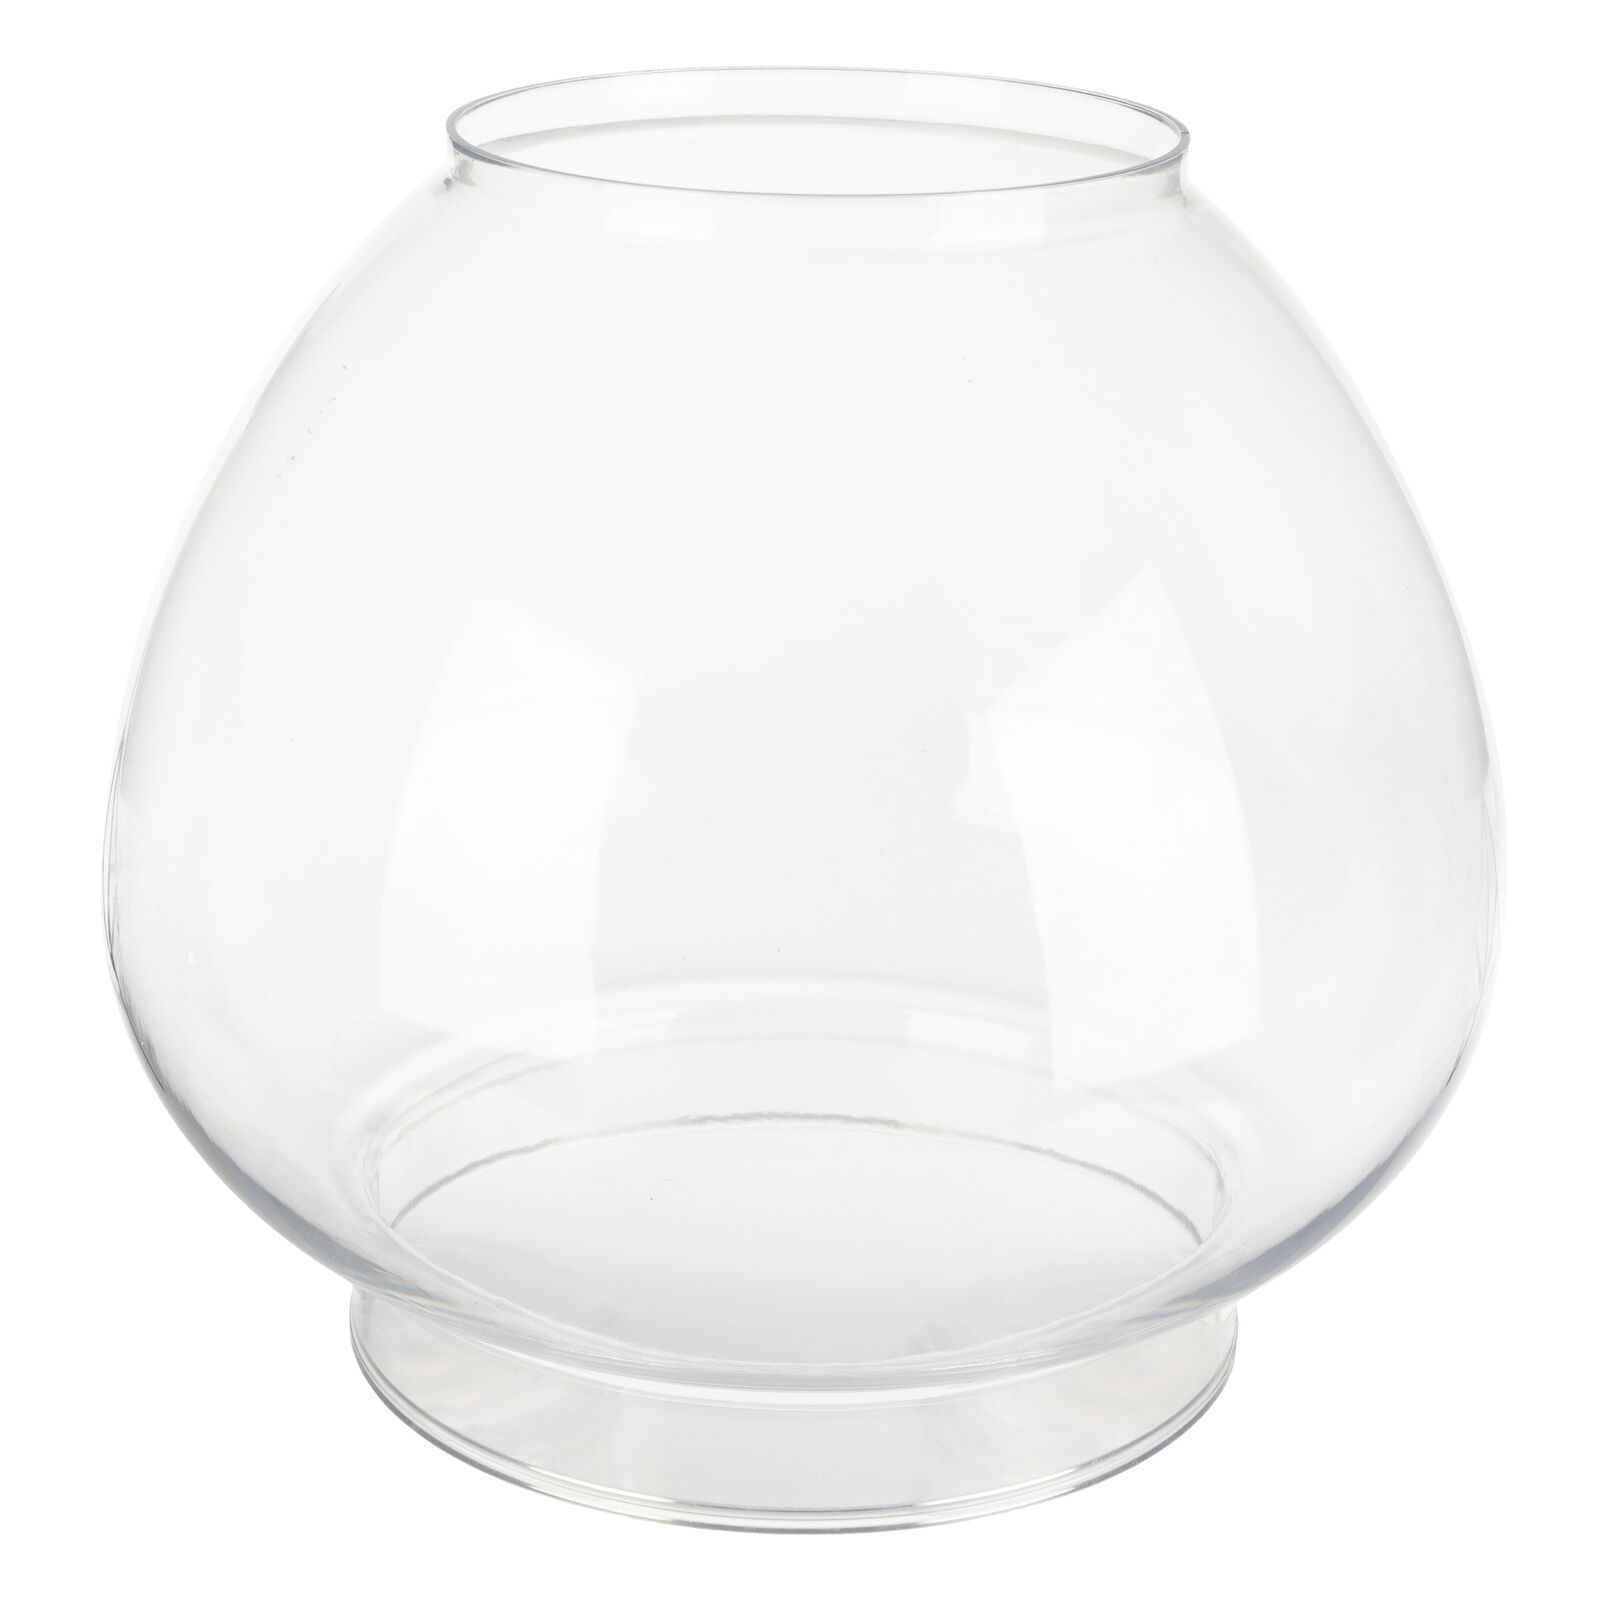 15in Gumball Machine Globe Replacement Shatterproof Plastic Bowl